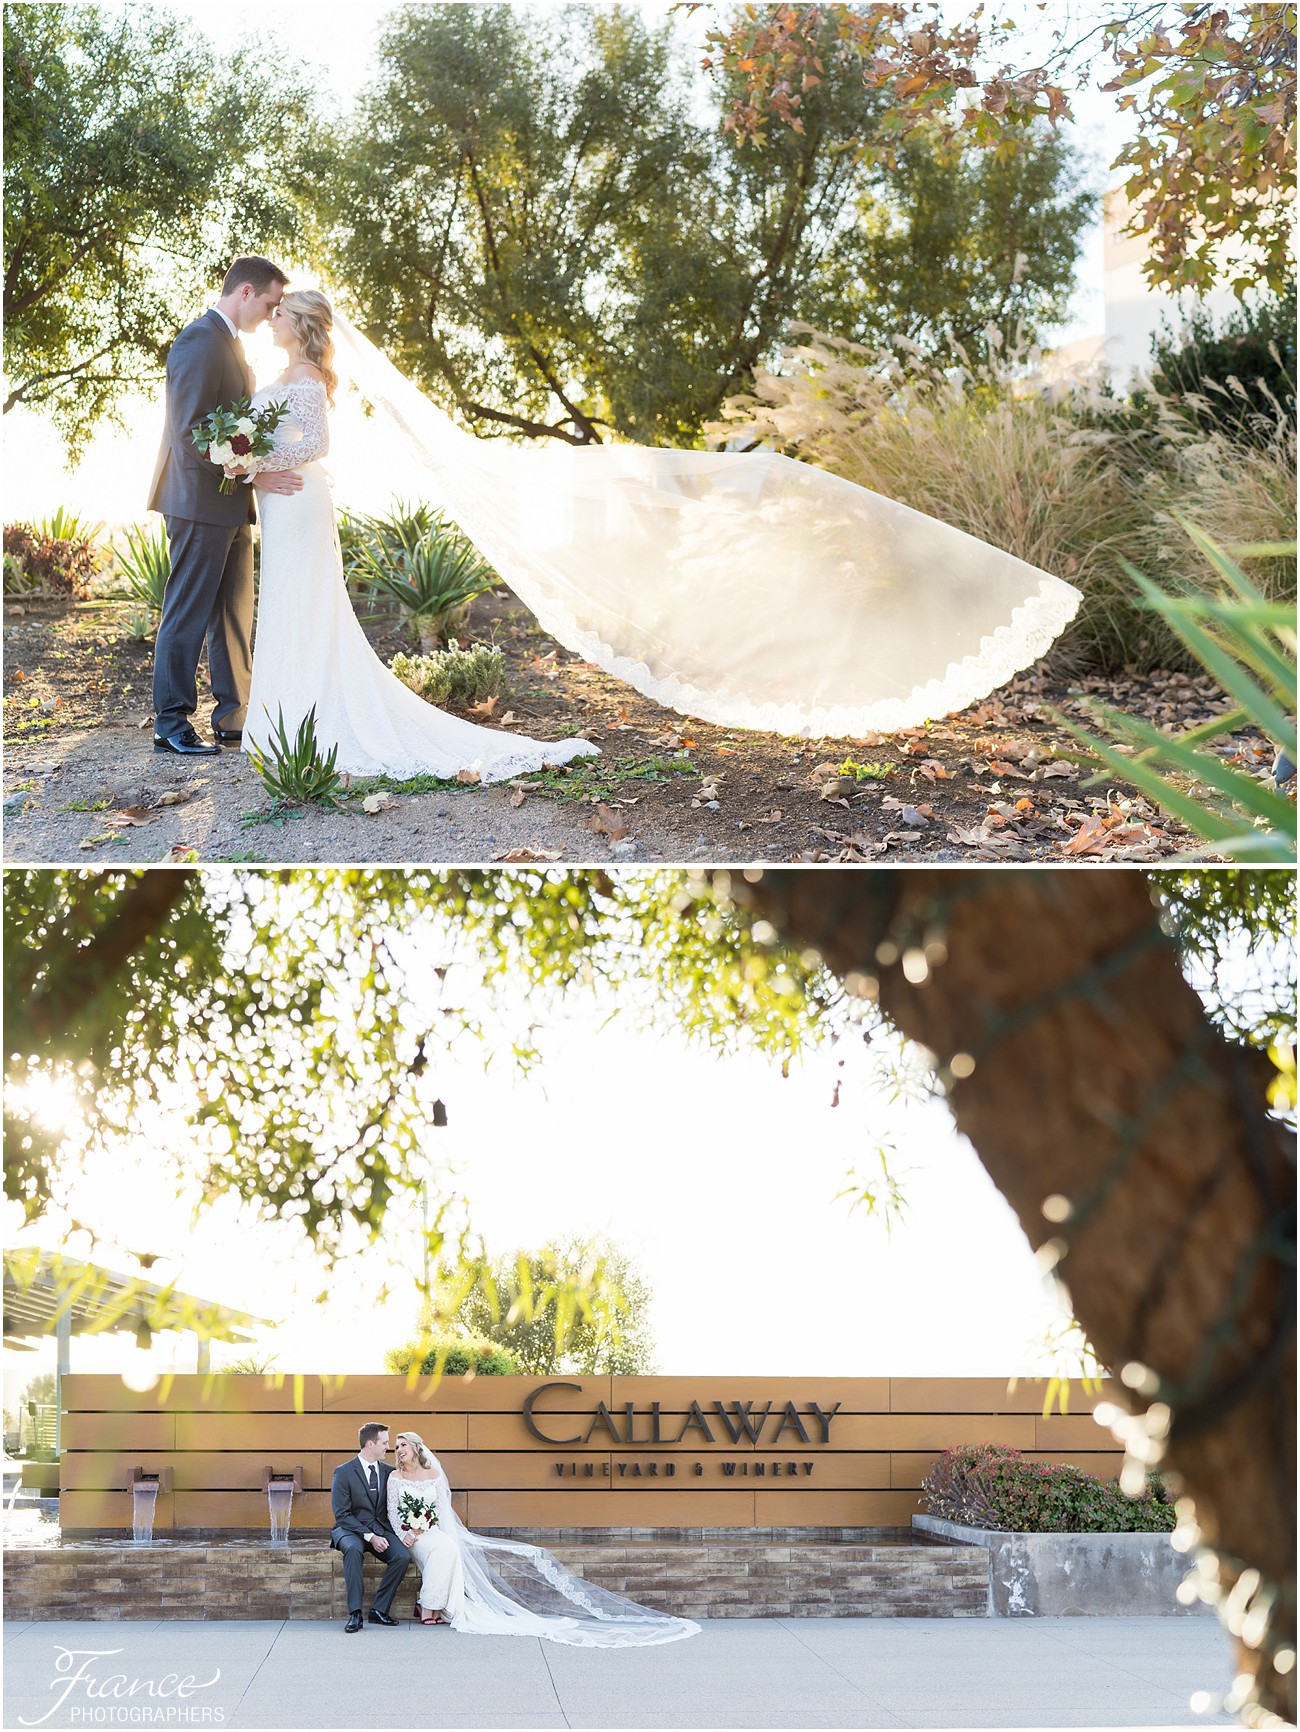 Callaway Winery bride and groom